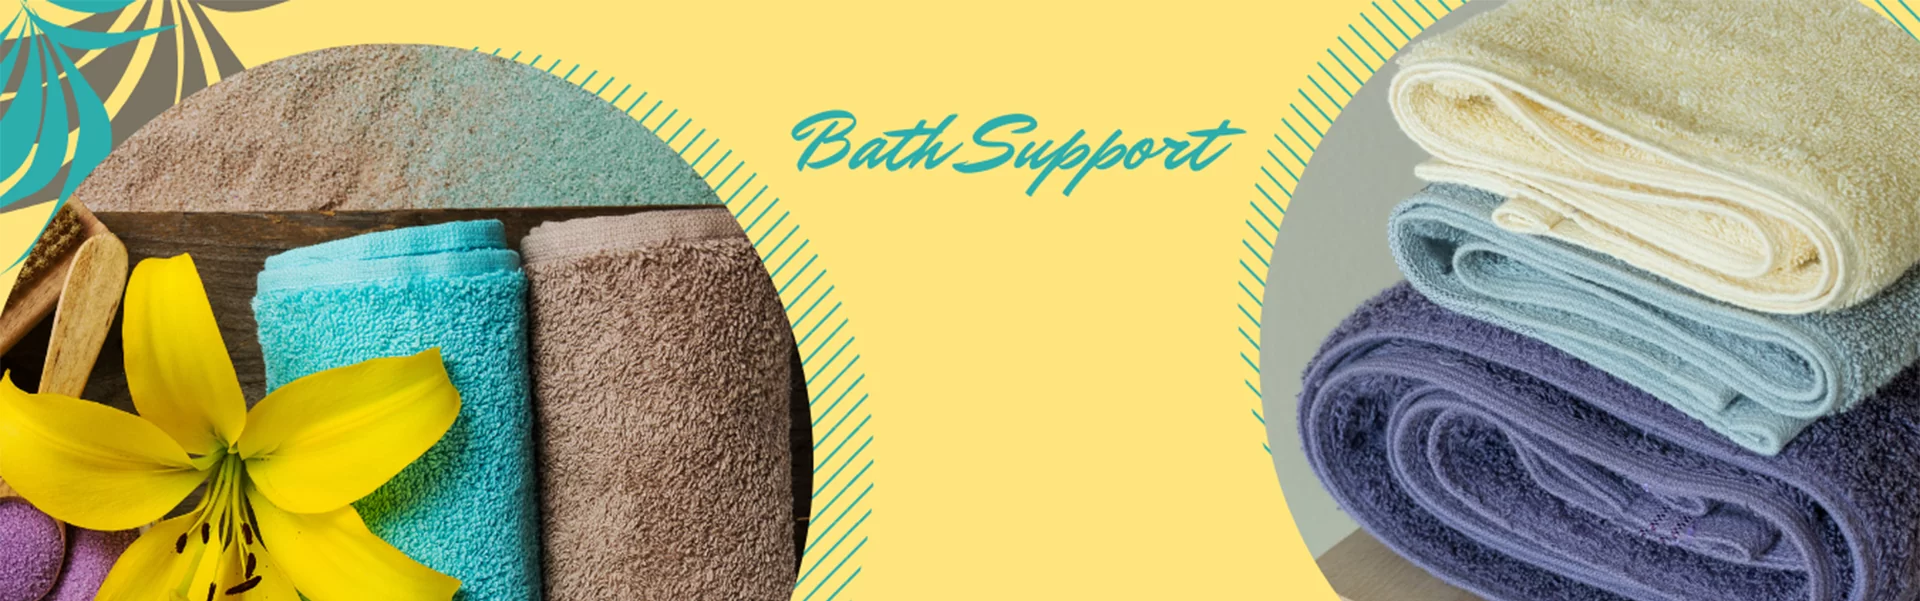 Bath Support